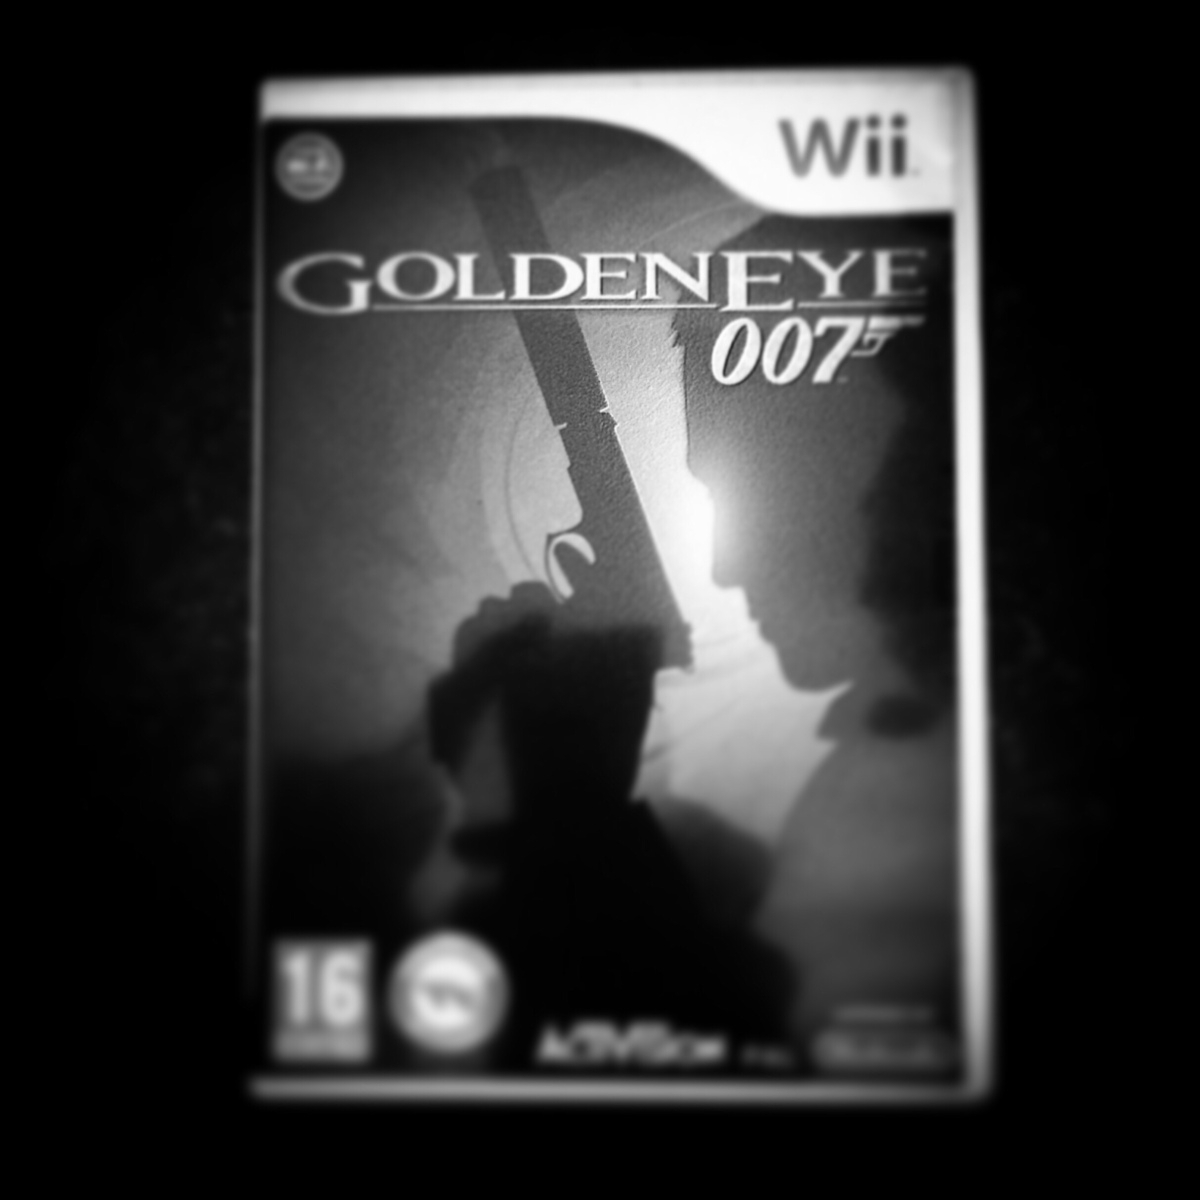 Goldeneye 007 (Wii) Review : r/wii